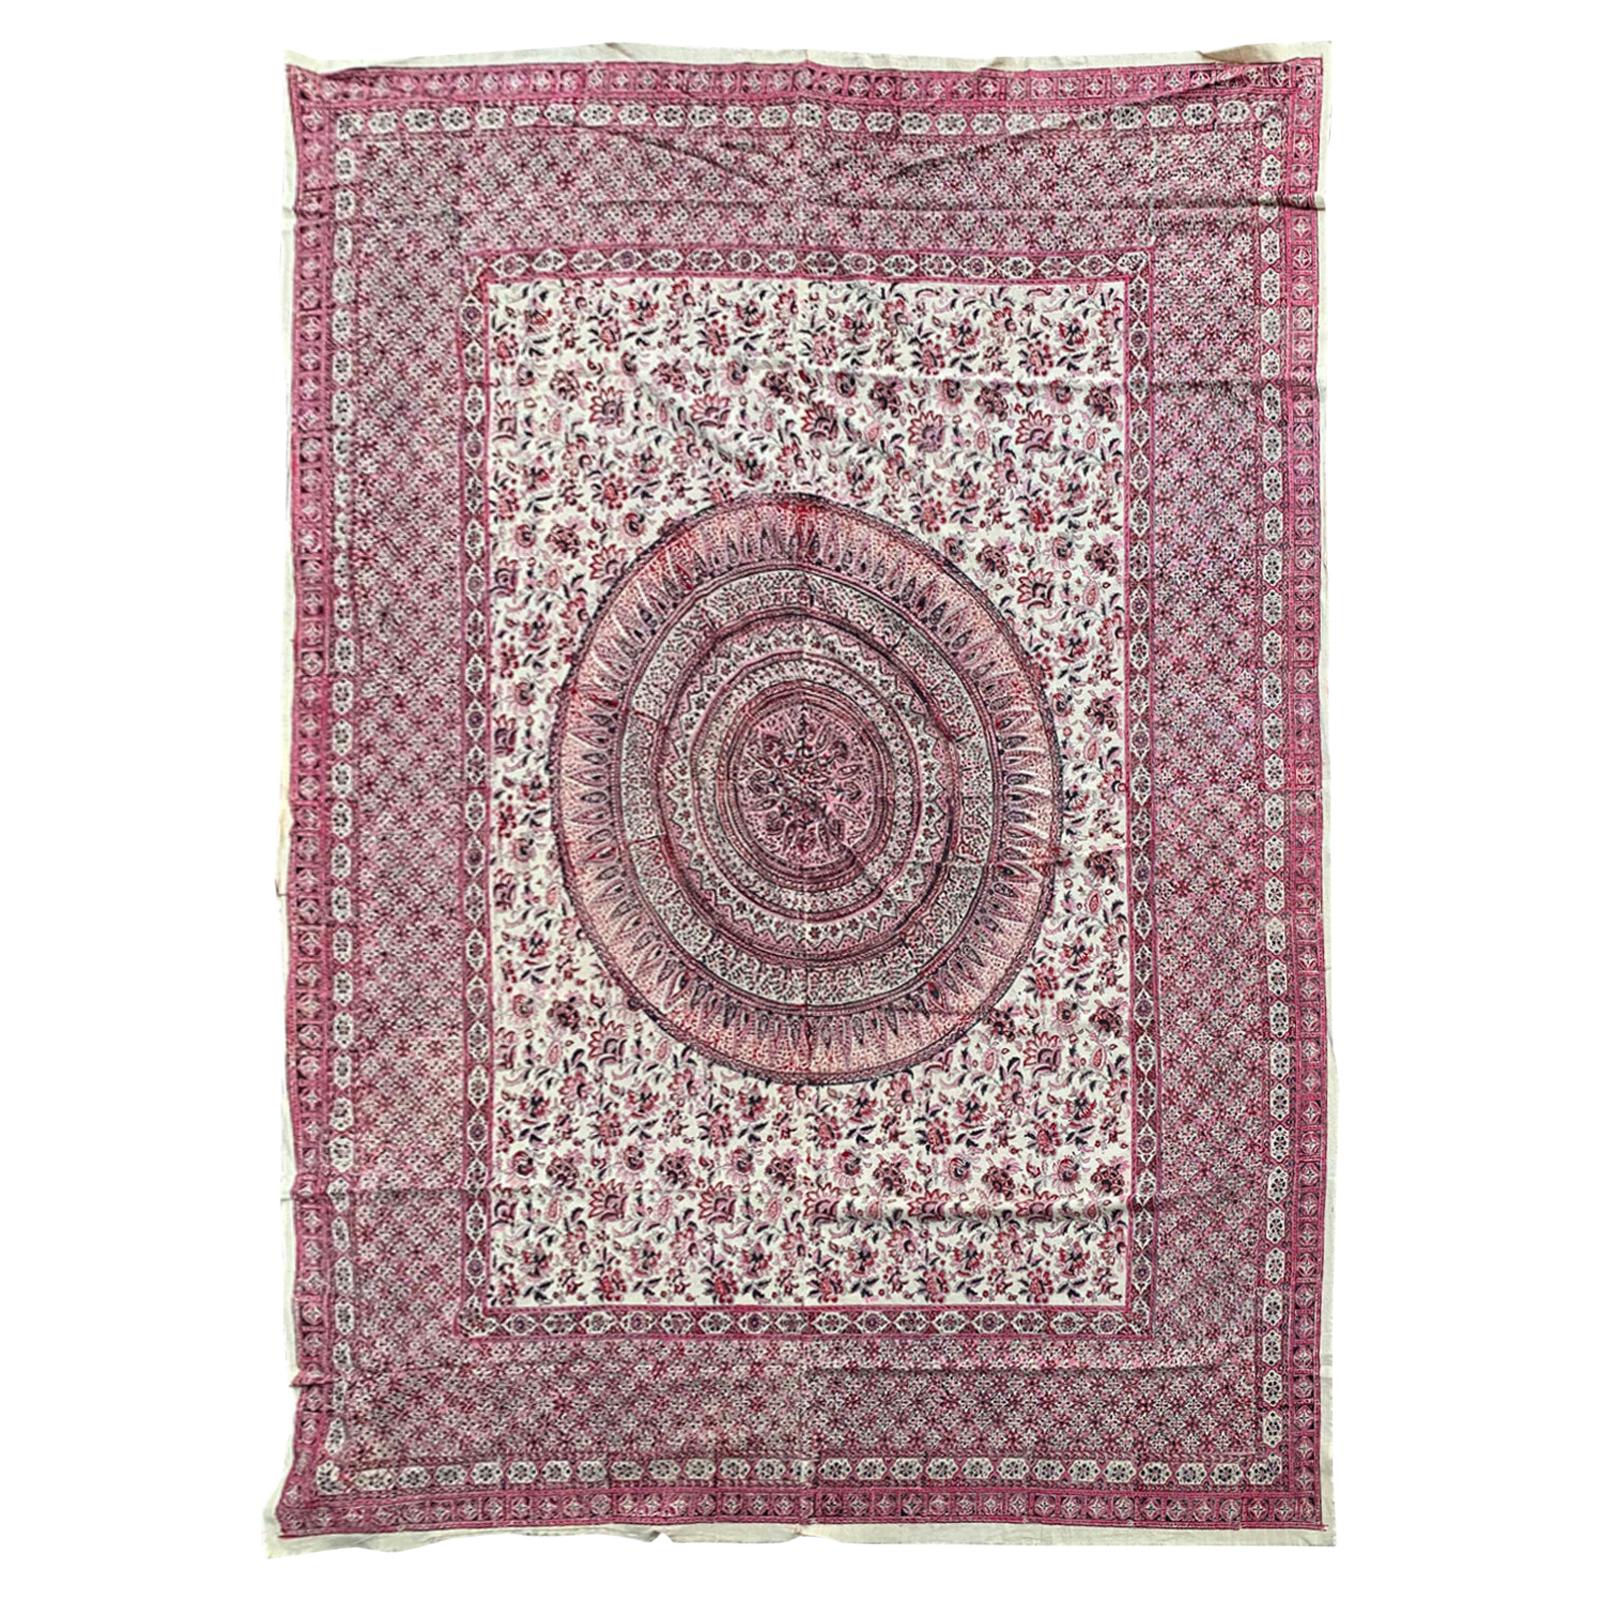 20th Century Indian Pink Lotus Mandala Fabric/Textile For Sale